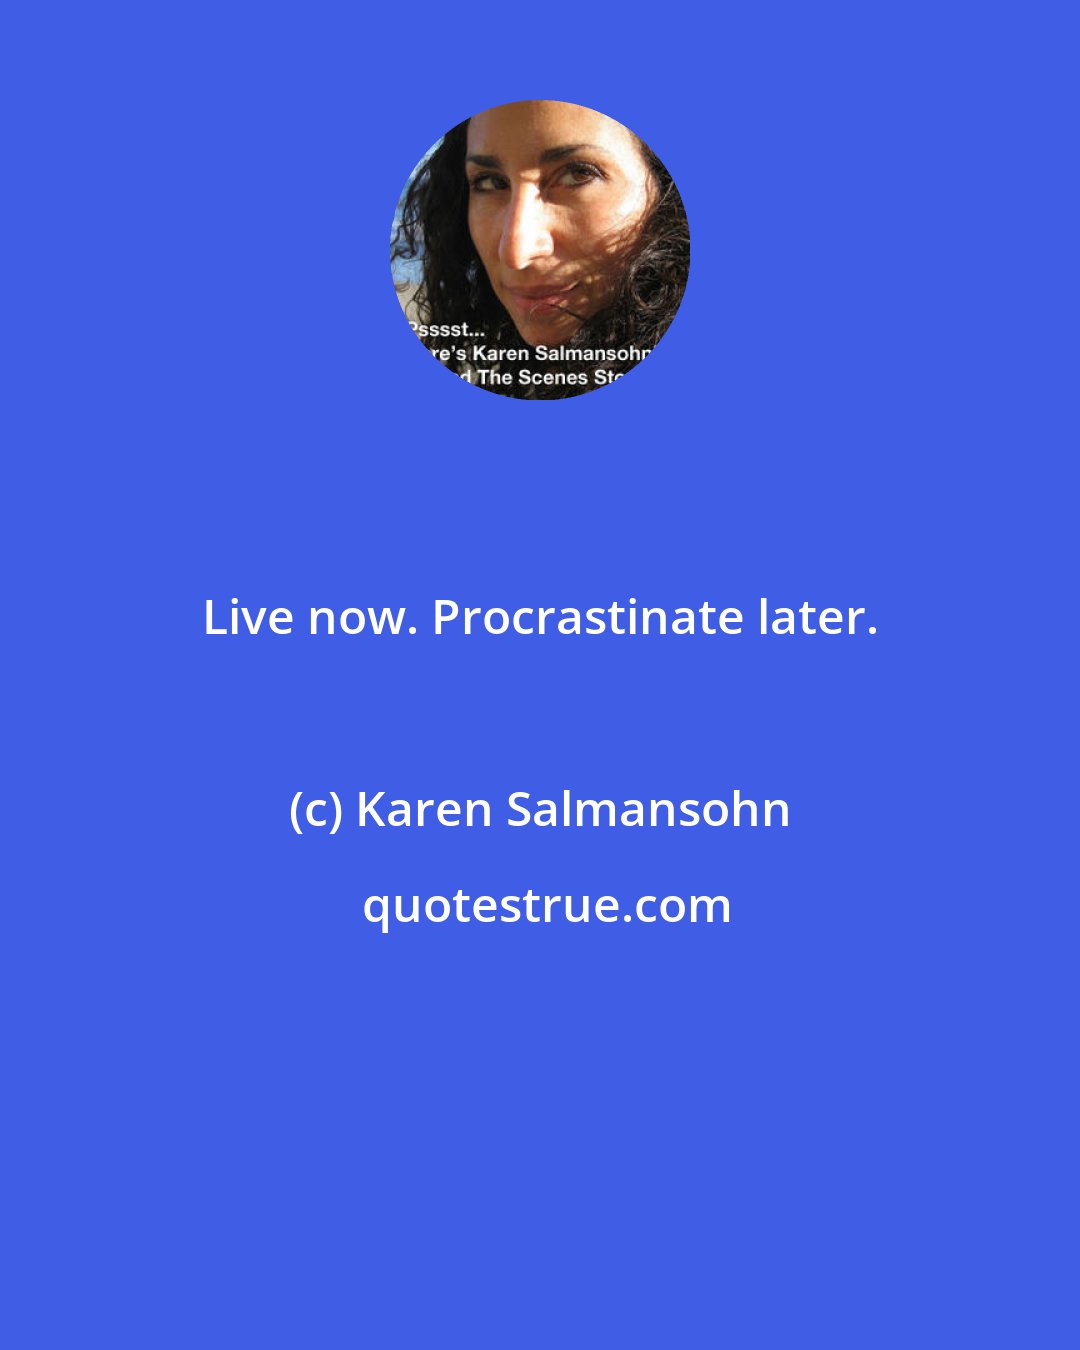 Karen Salmansohn: Live now. Procrastinate later.